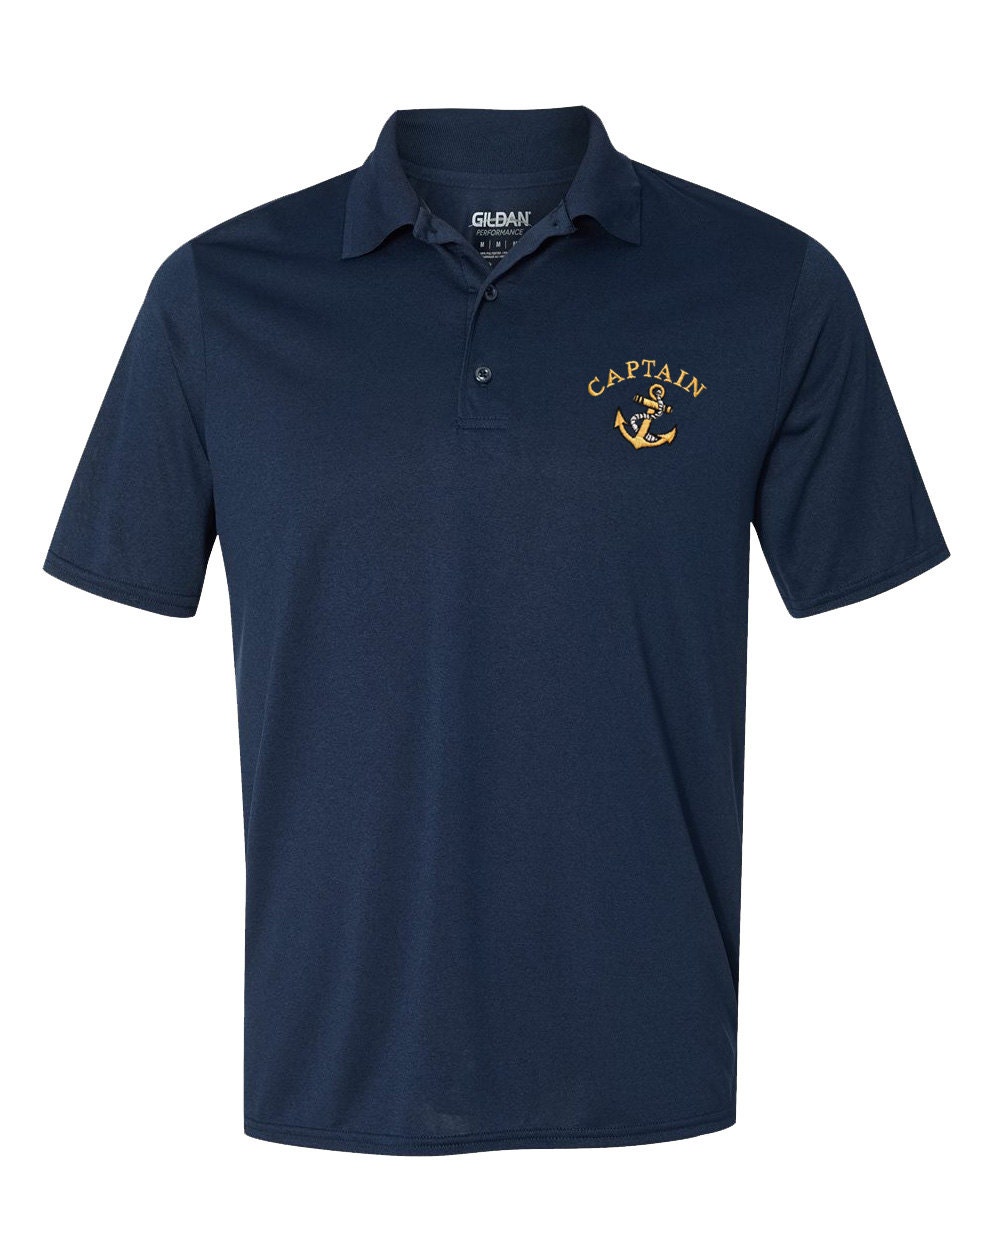 Discover Men's Captain Anchor Ships Embroidered  Shirt